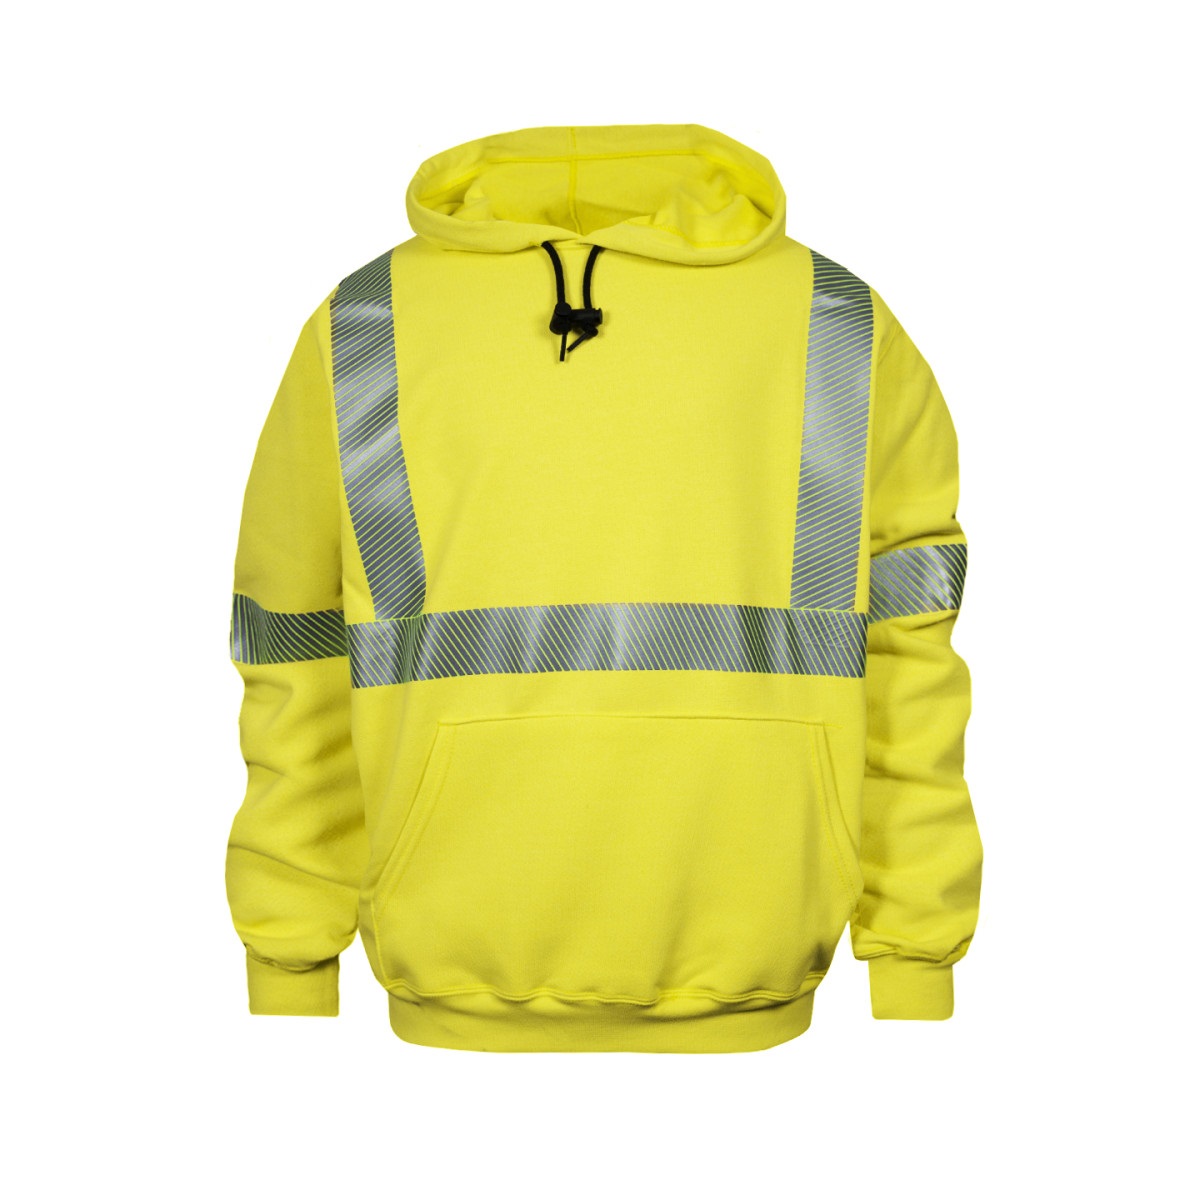 NSA FR Hi-Vis Hooded Sweatshirt in Fluorescent Yellow